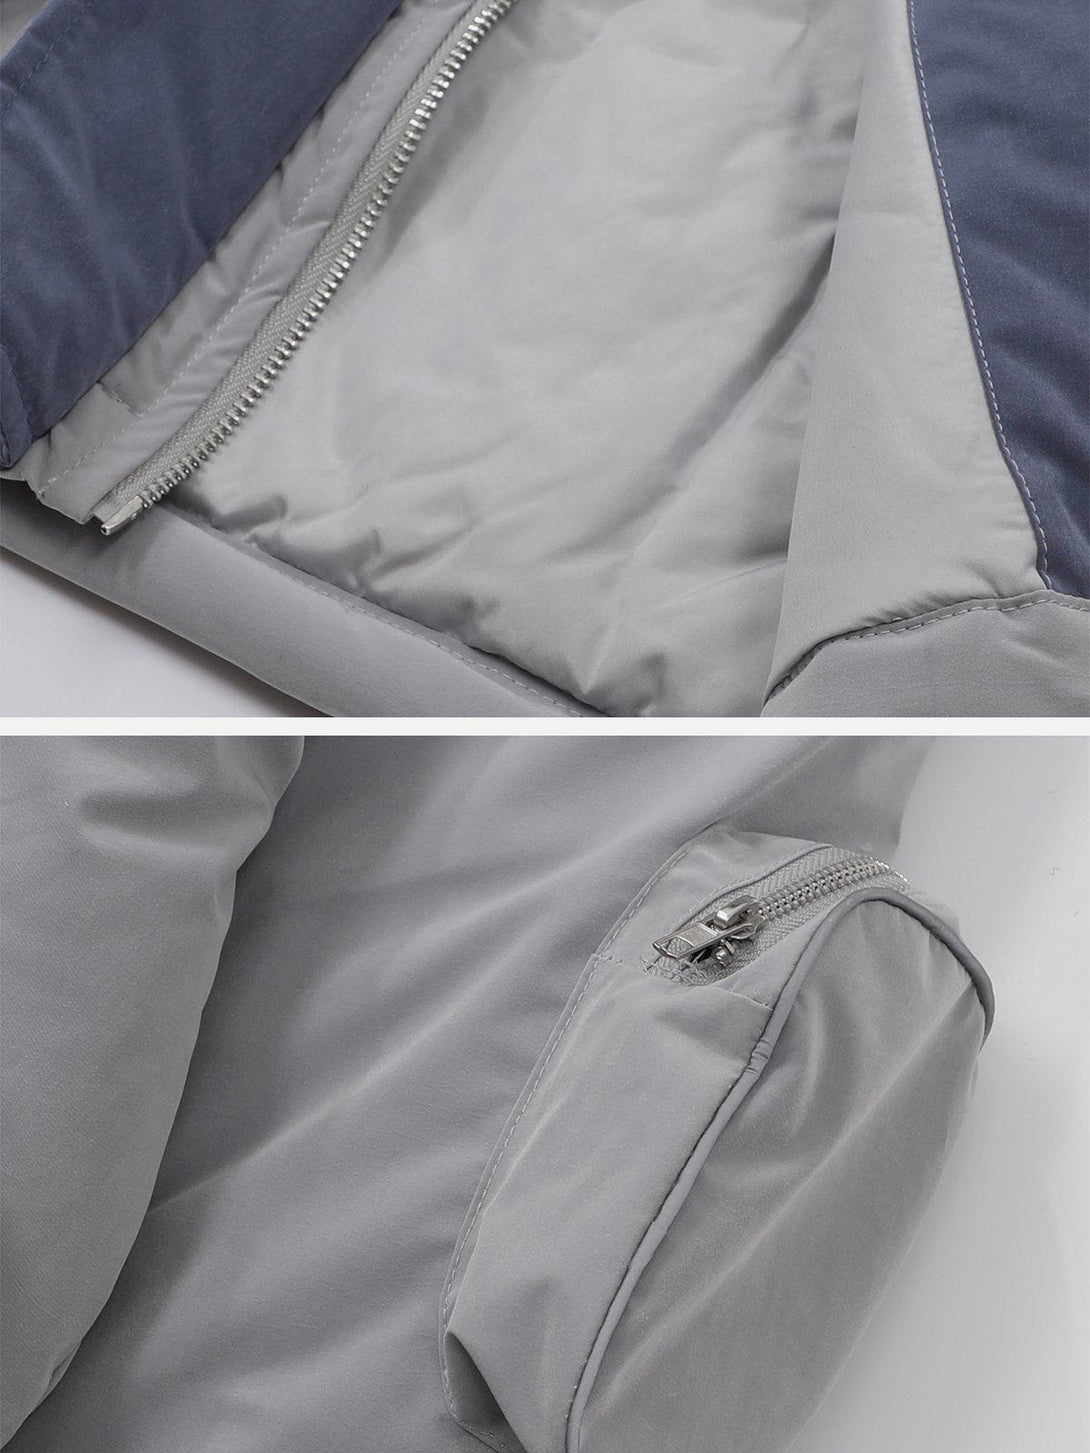 Majesda® - Large Pockets Anorak outfit ideas, streetwear fashion - majesda.com